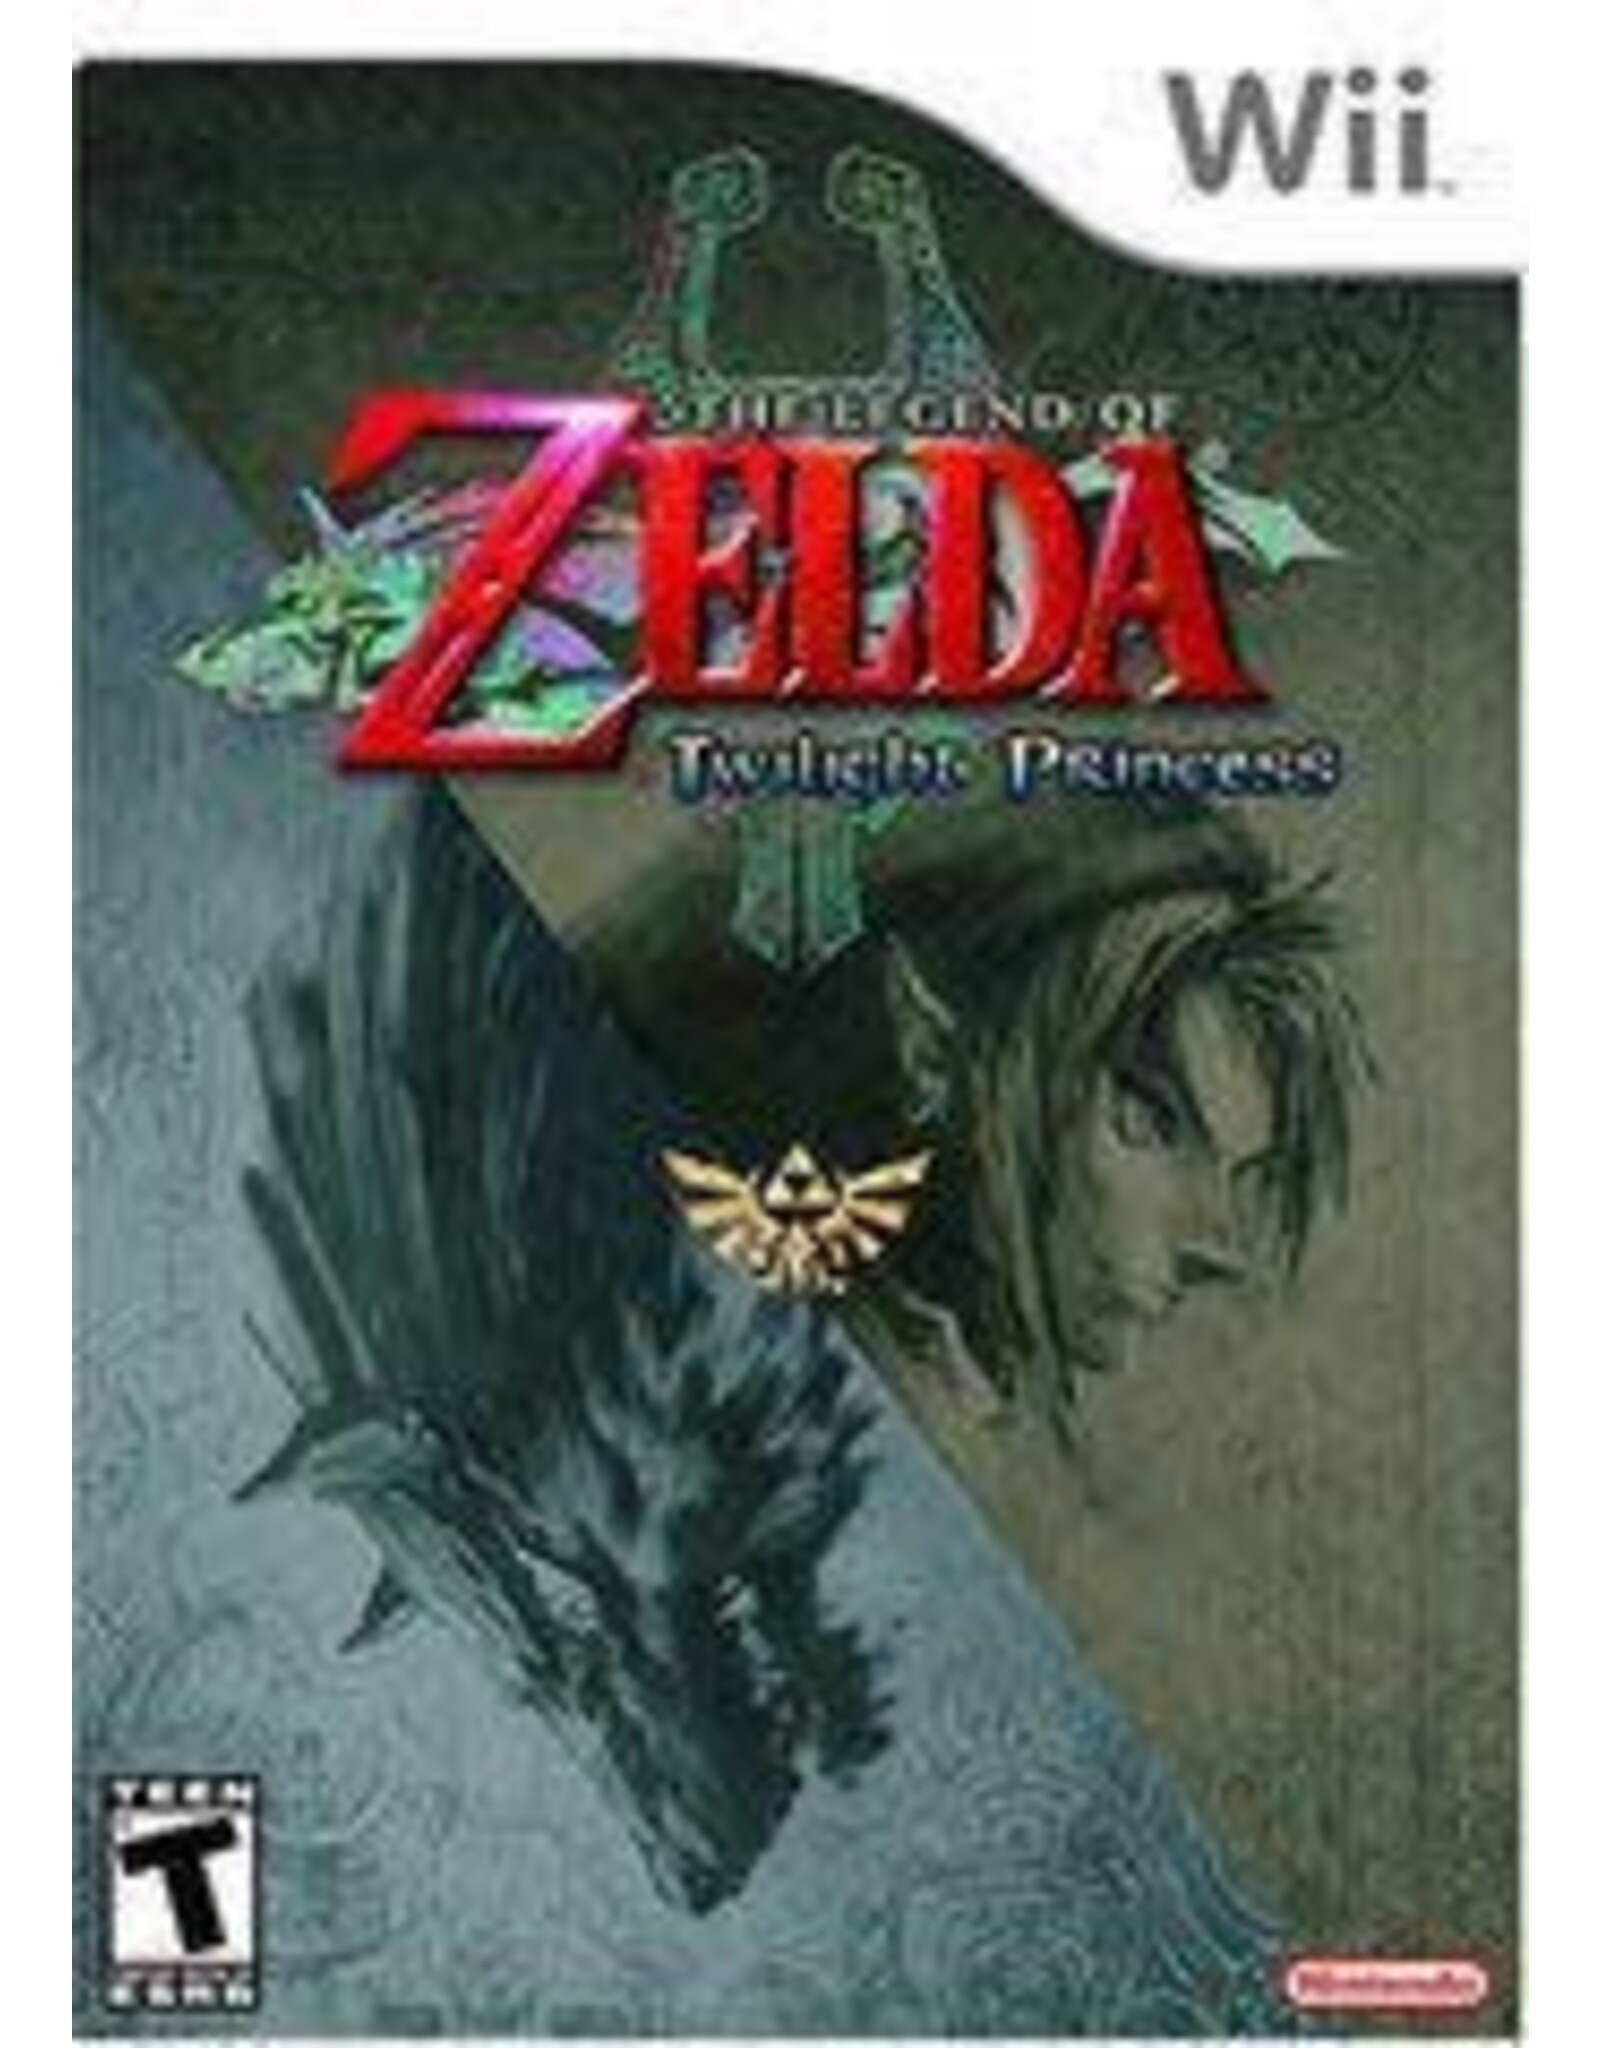 Wii Legend of Zelda Twilight Princess, The (Used)